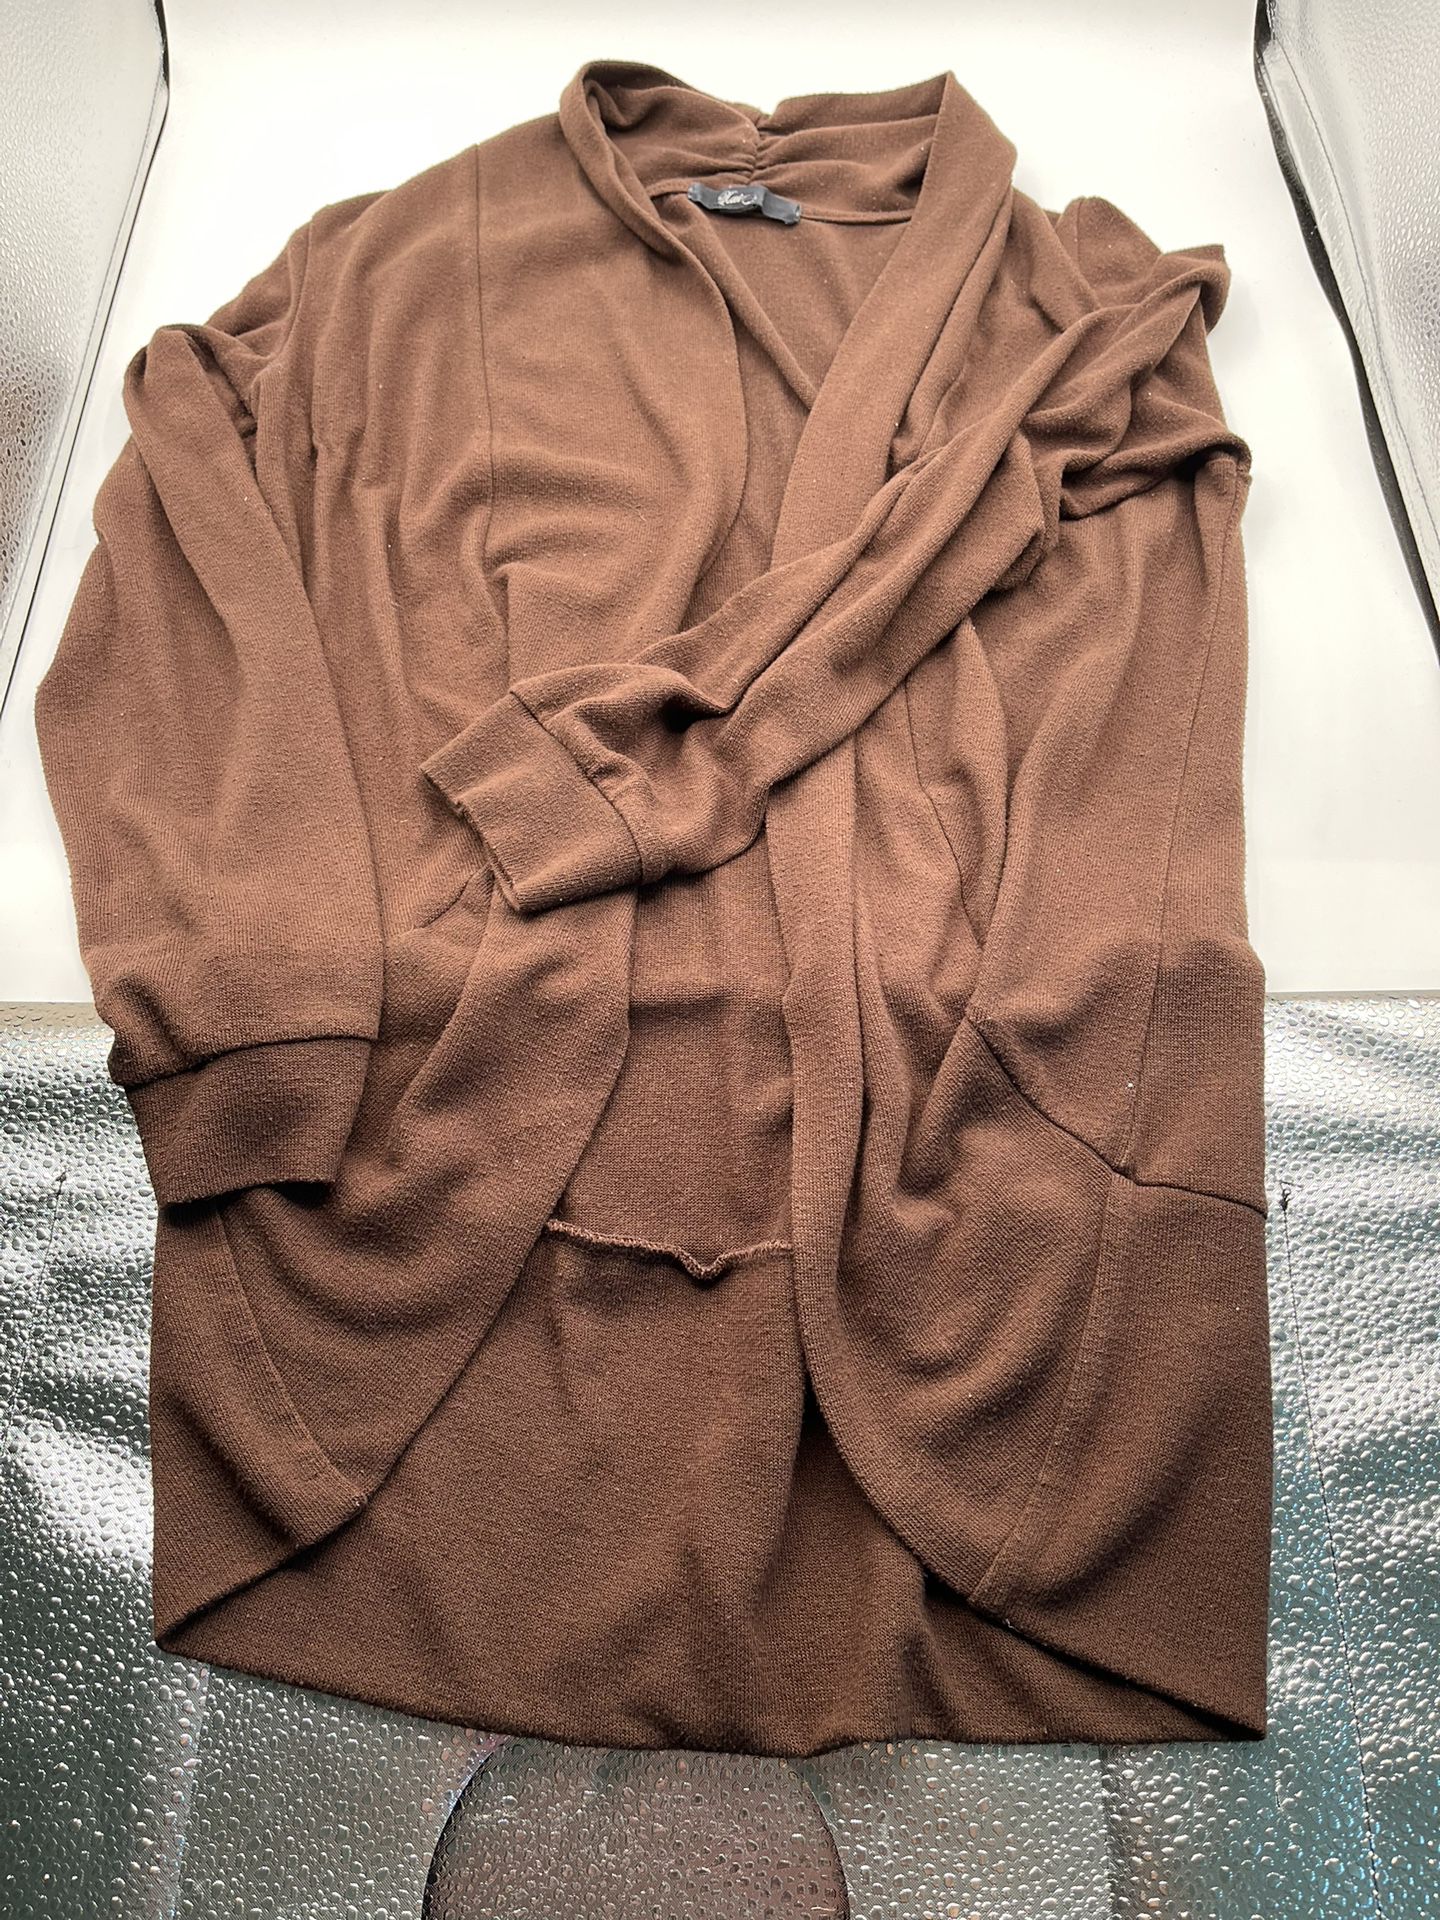 Xai Open Front Brown Cardigan Size Medium 